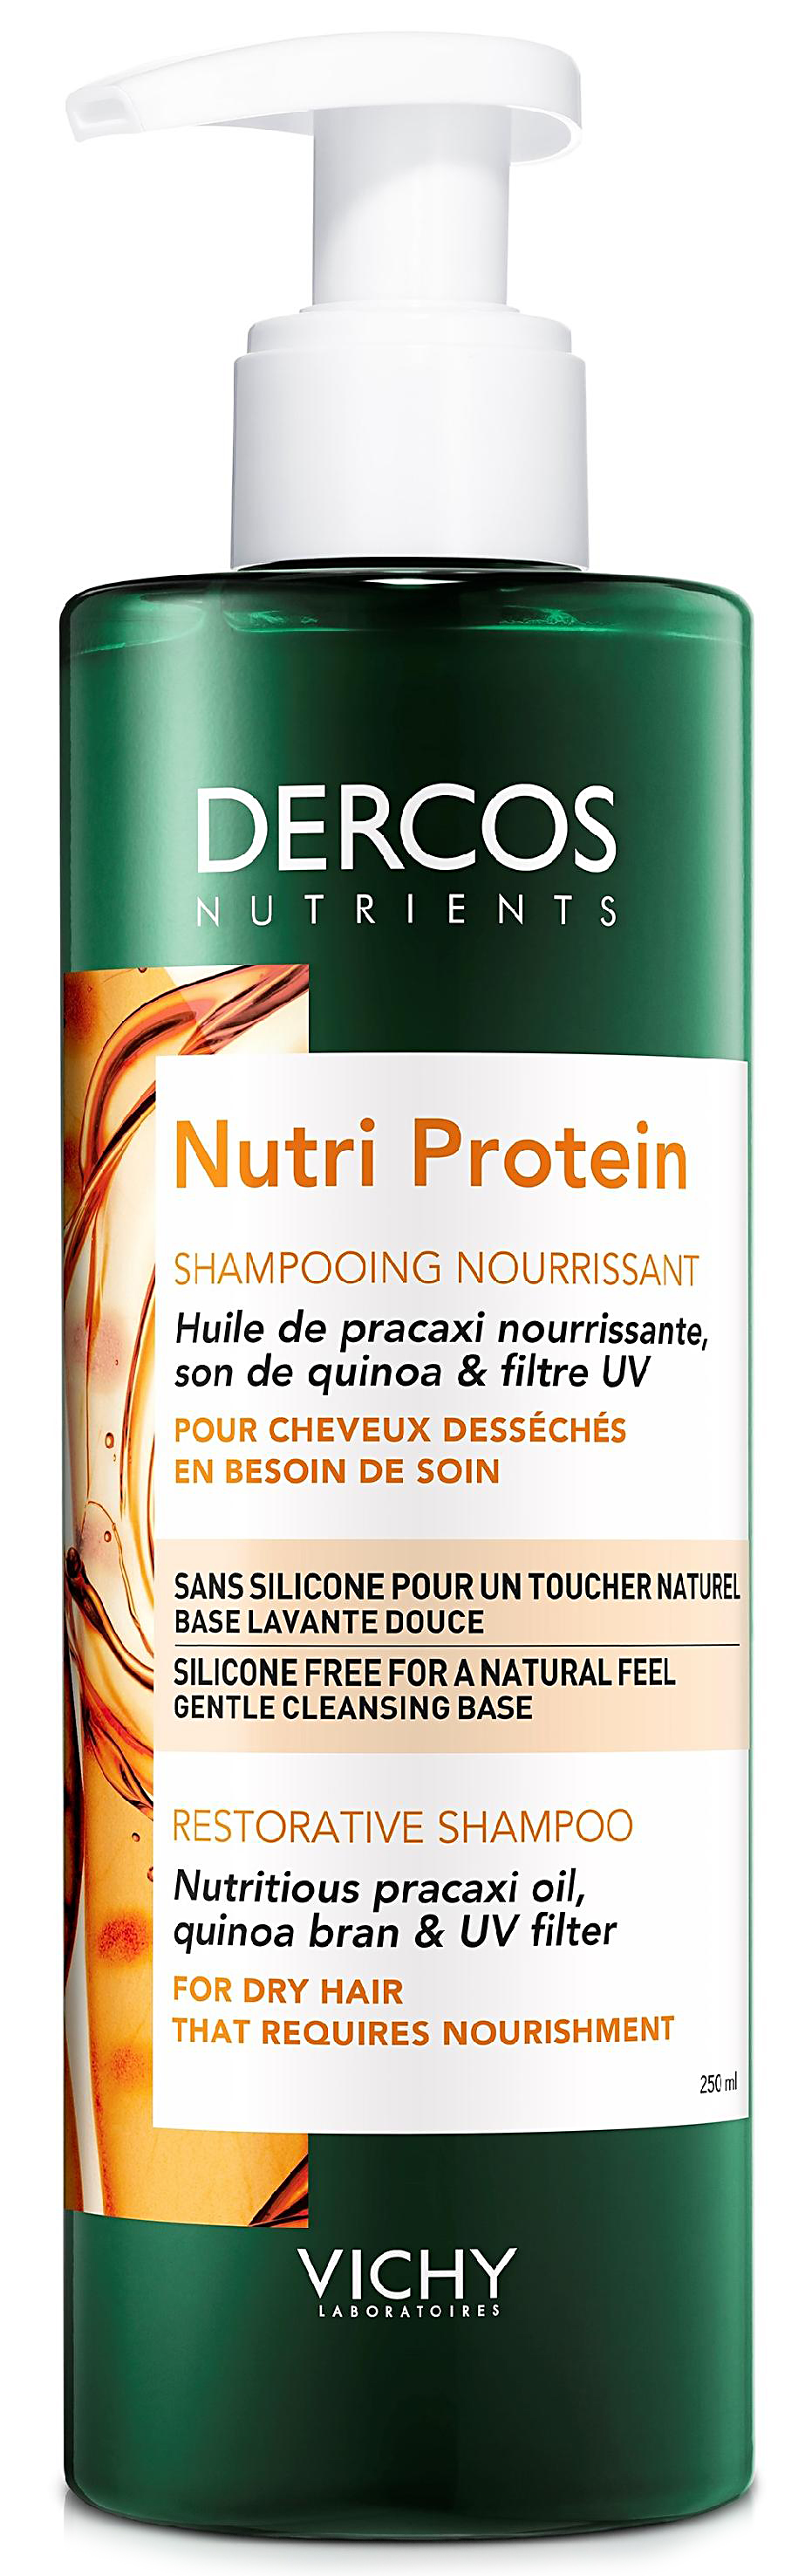 Dercos nutrients nutri protein шампунь восстанавливающий для секущихся и поврежденных волос 250мл Vichy (Виши)